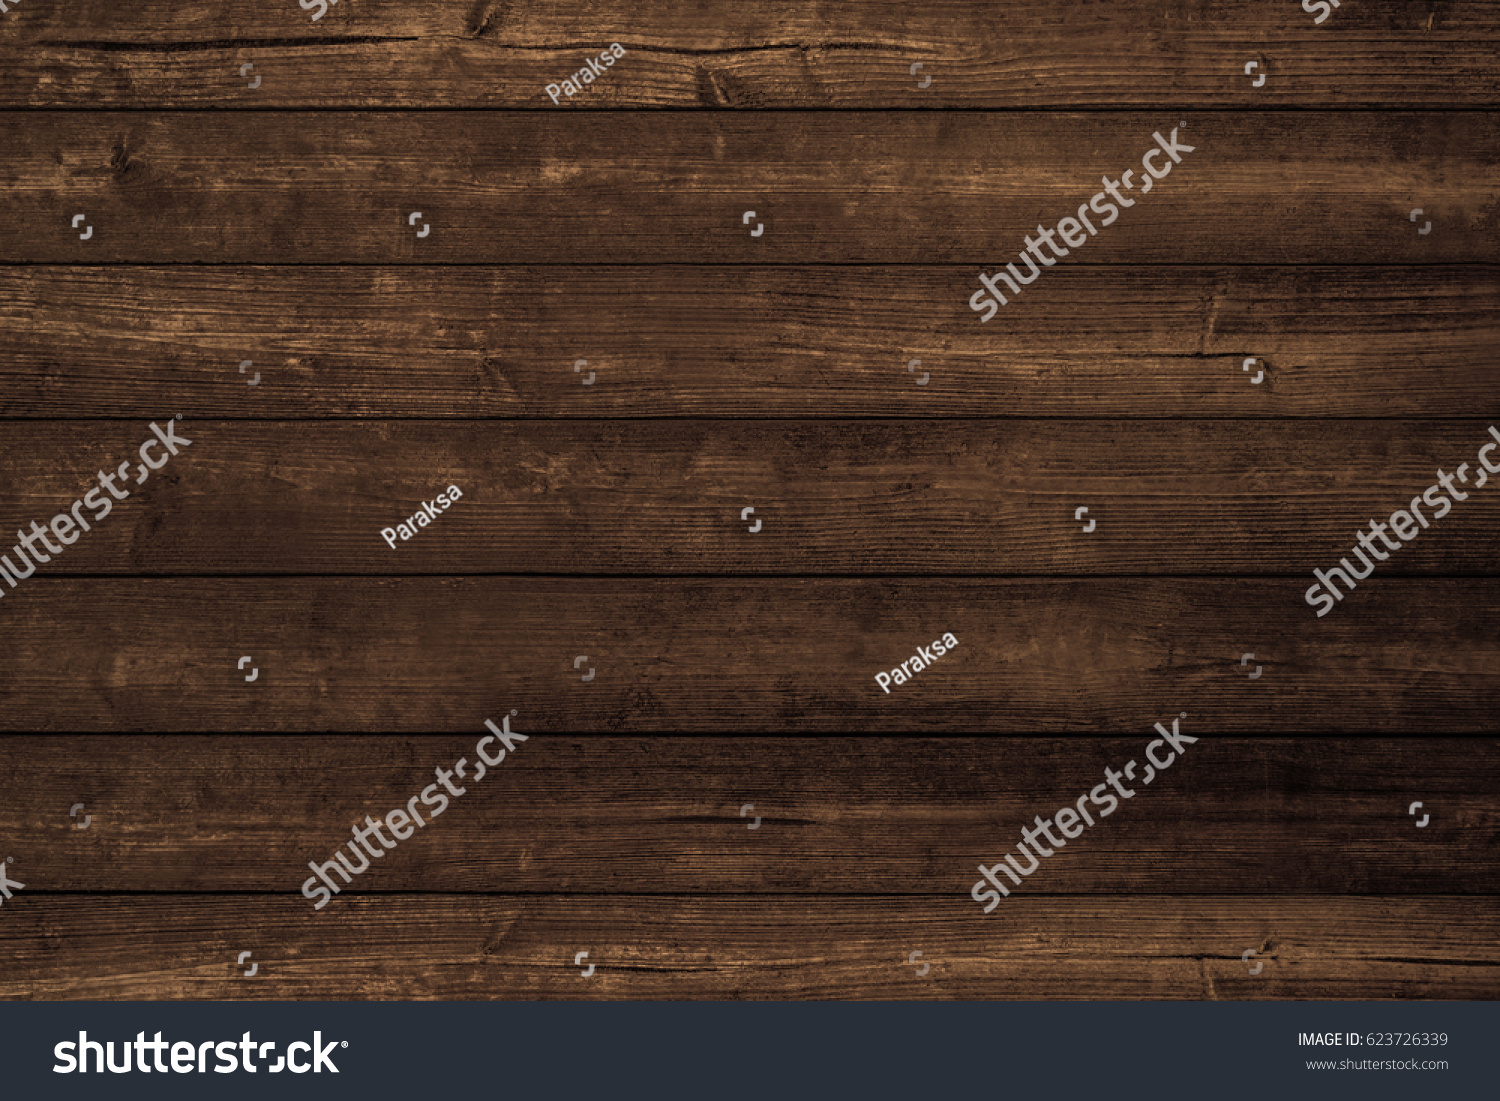 Wood texture background, wood planks #623726339